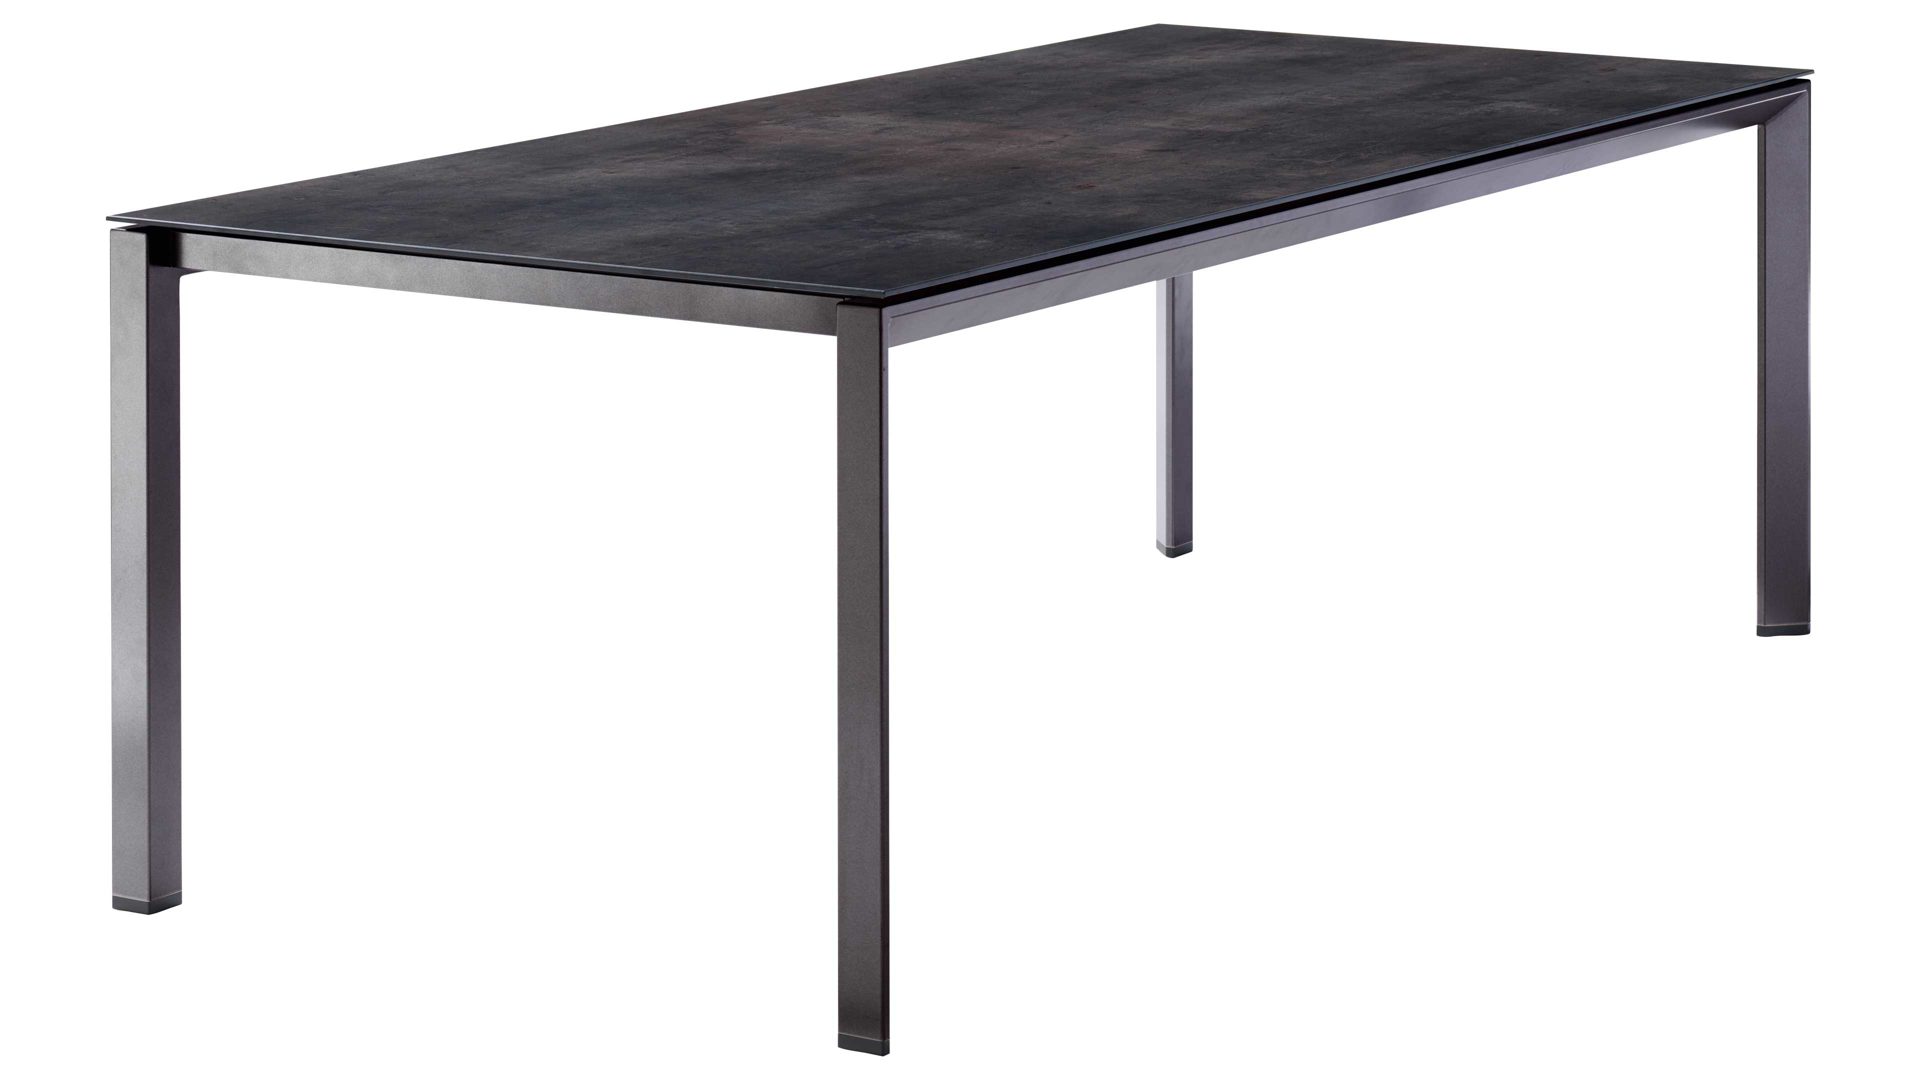 Tischgestell Sieger aus Metall in Grau sieger Tischgestell eisengraues Aluminium  - ca. 220 x 100 cm